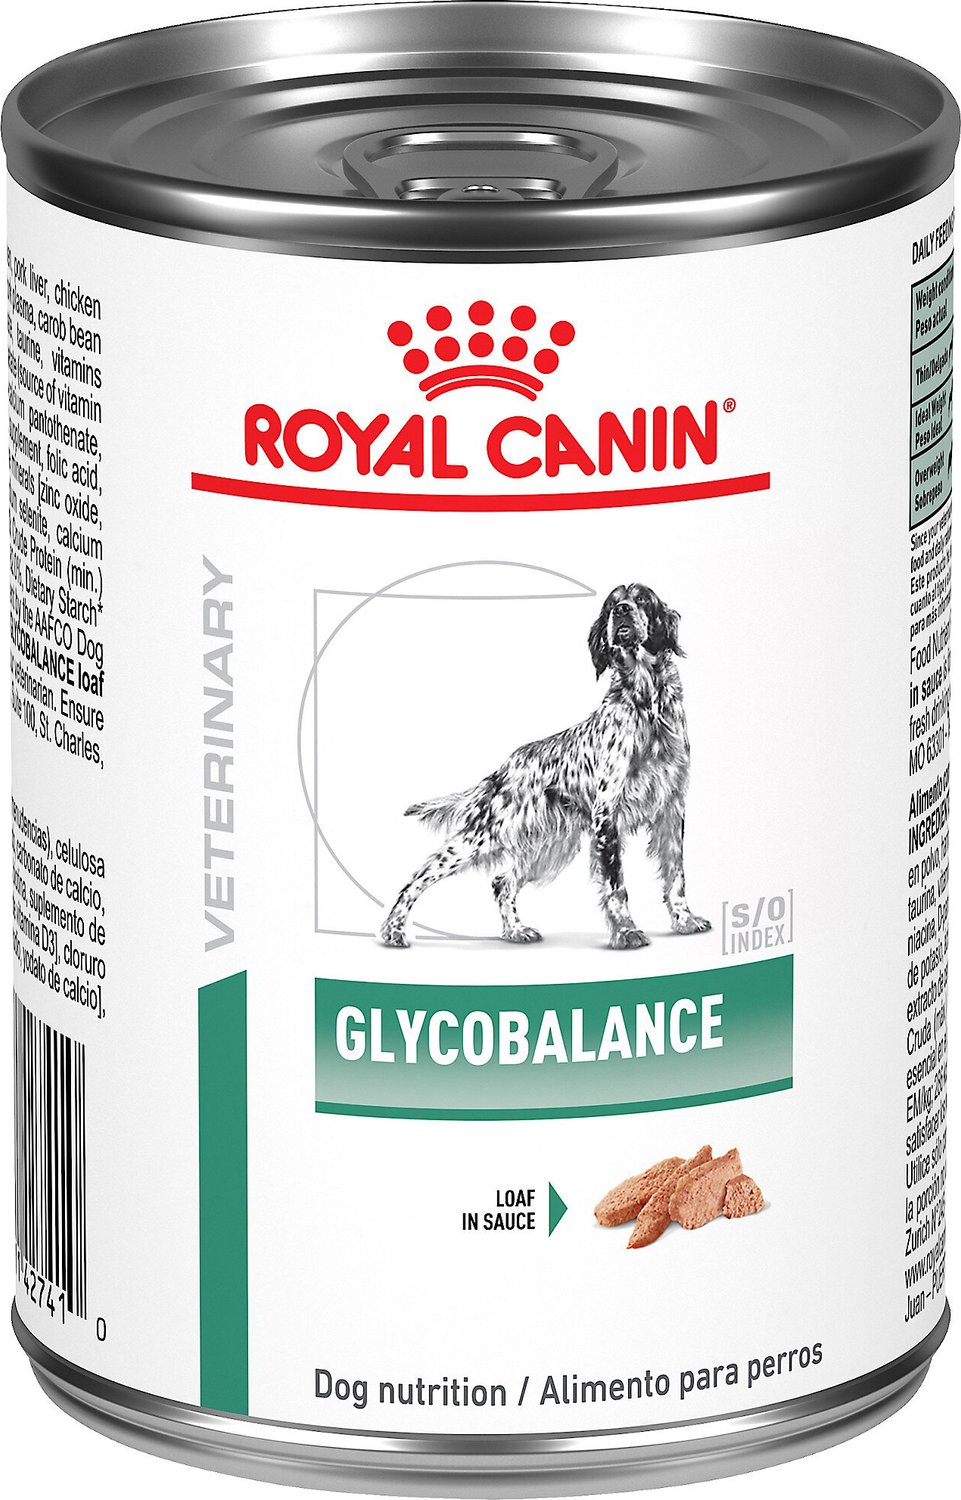 glycobalance wet dog food